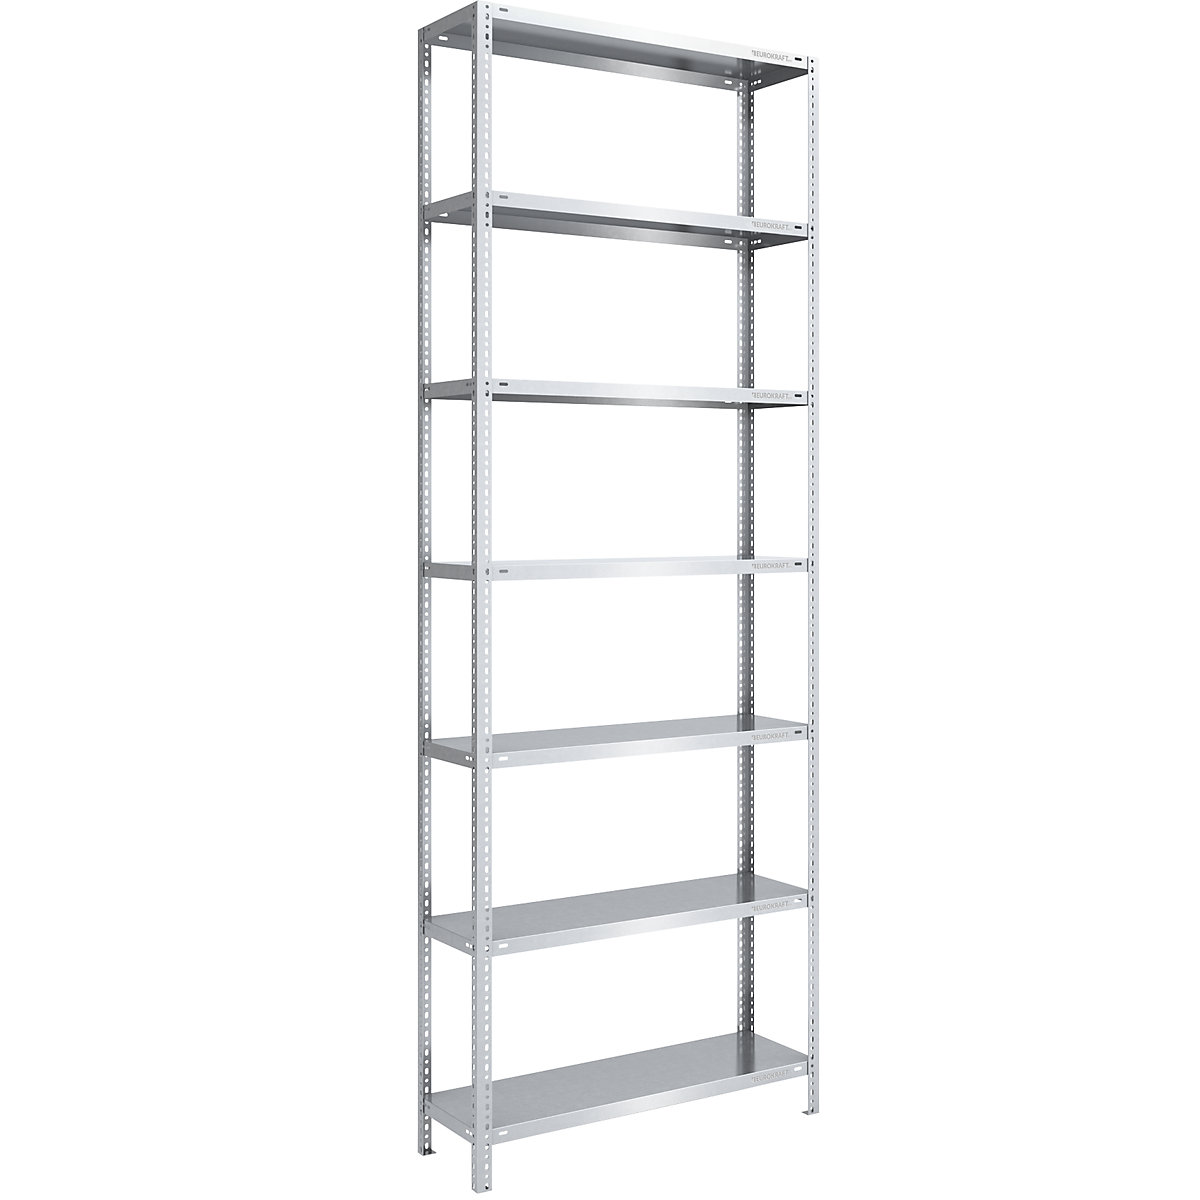 Bolt-together shelf unit, light duty, zinc plated – eurokraft pro, shelf unit height 3000 mm, shelf width 1000 mm, depth 400 mm, standard shelf unit-6